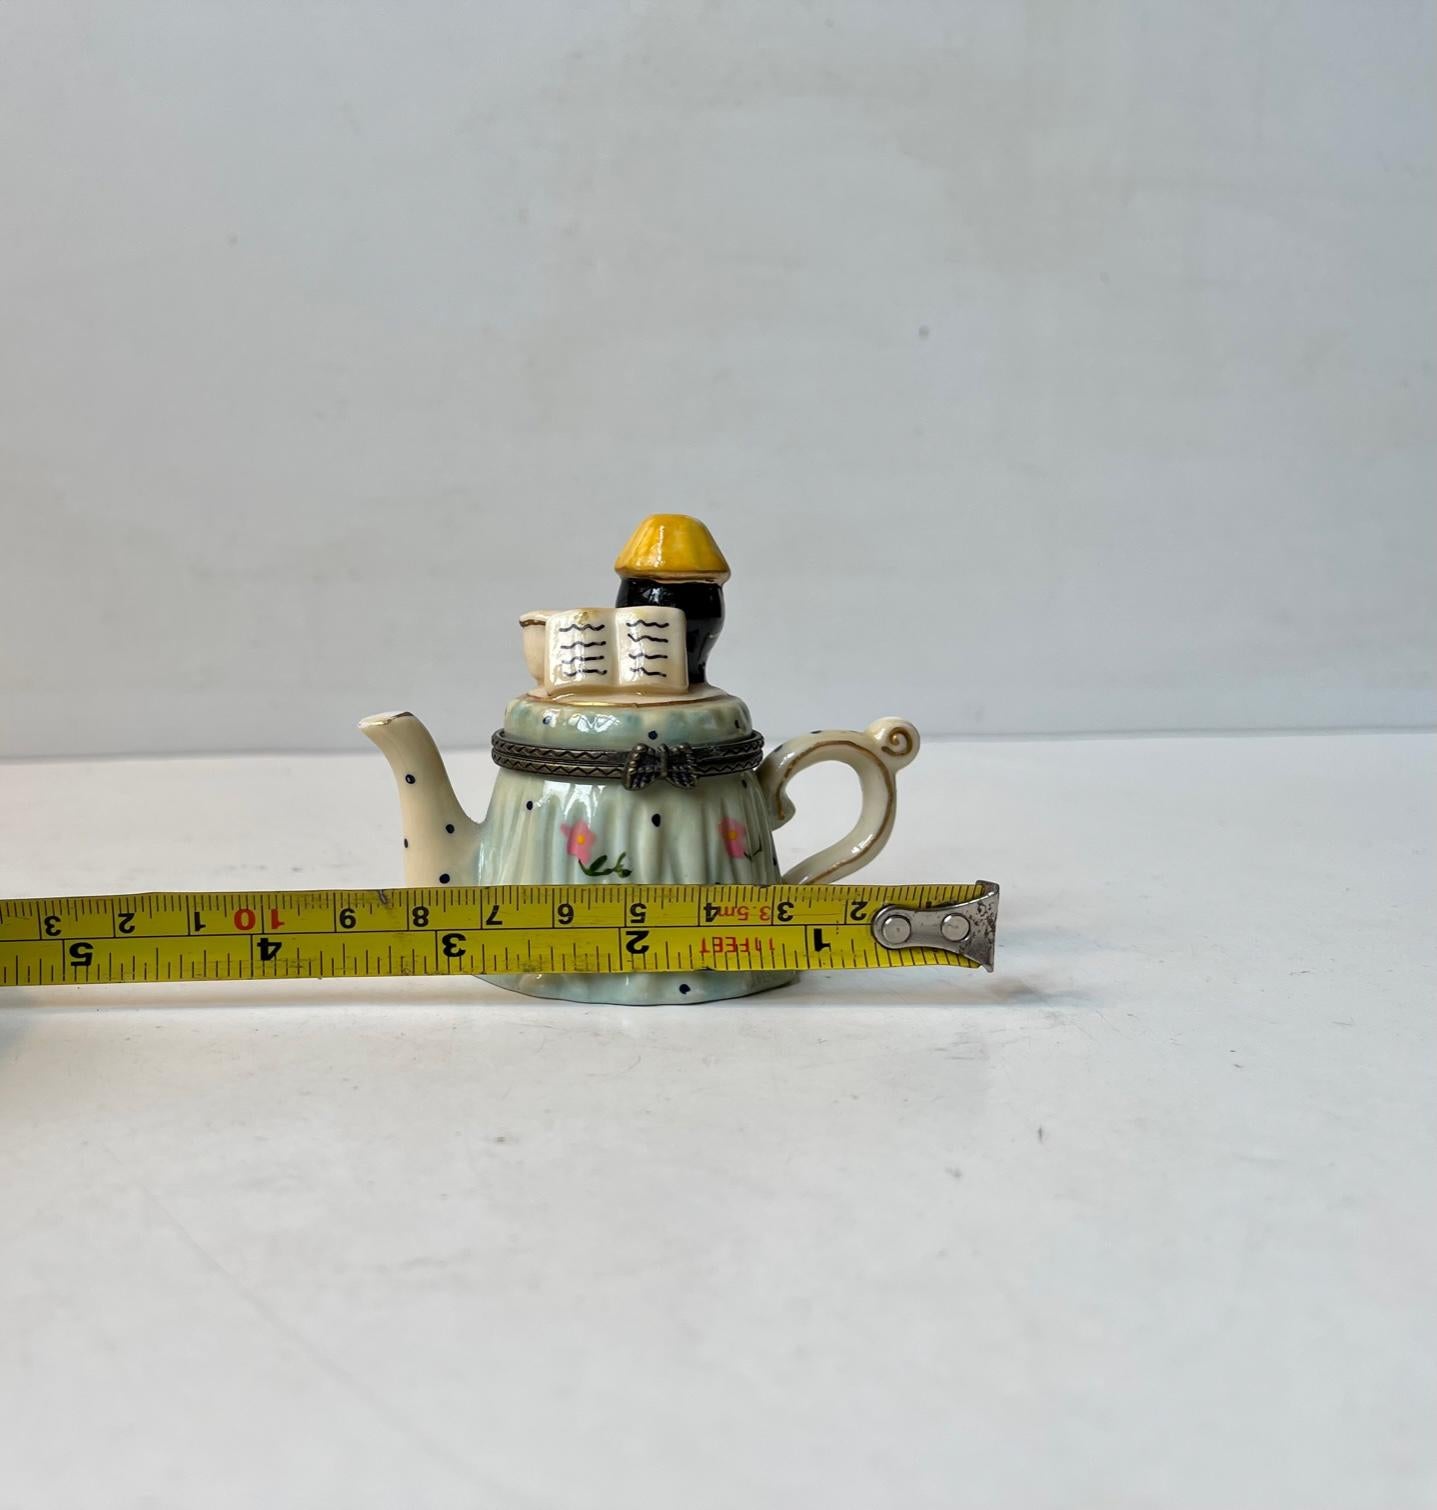 Vintage Hand-Painted Porcelain Teapot Trinket with Black Reader In Good Condition For Sale In Esbjerg, DK